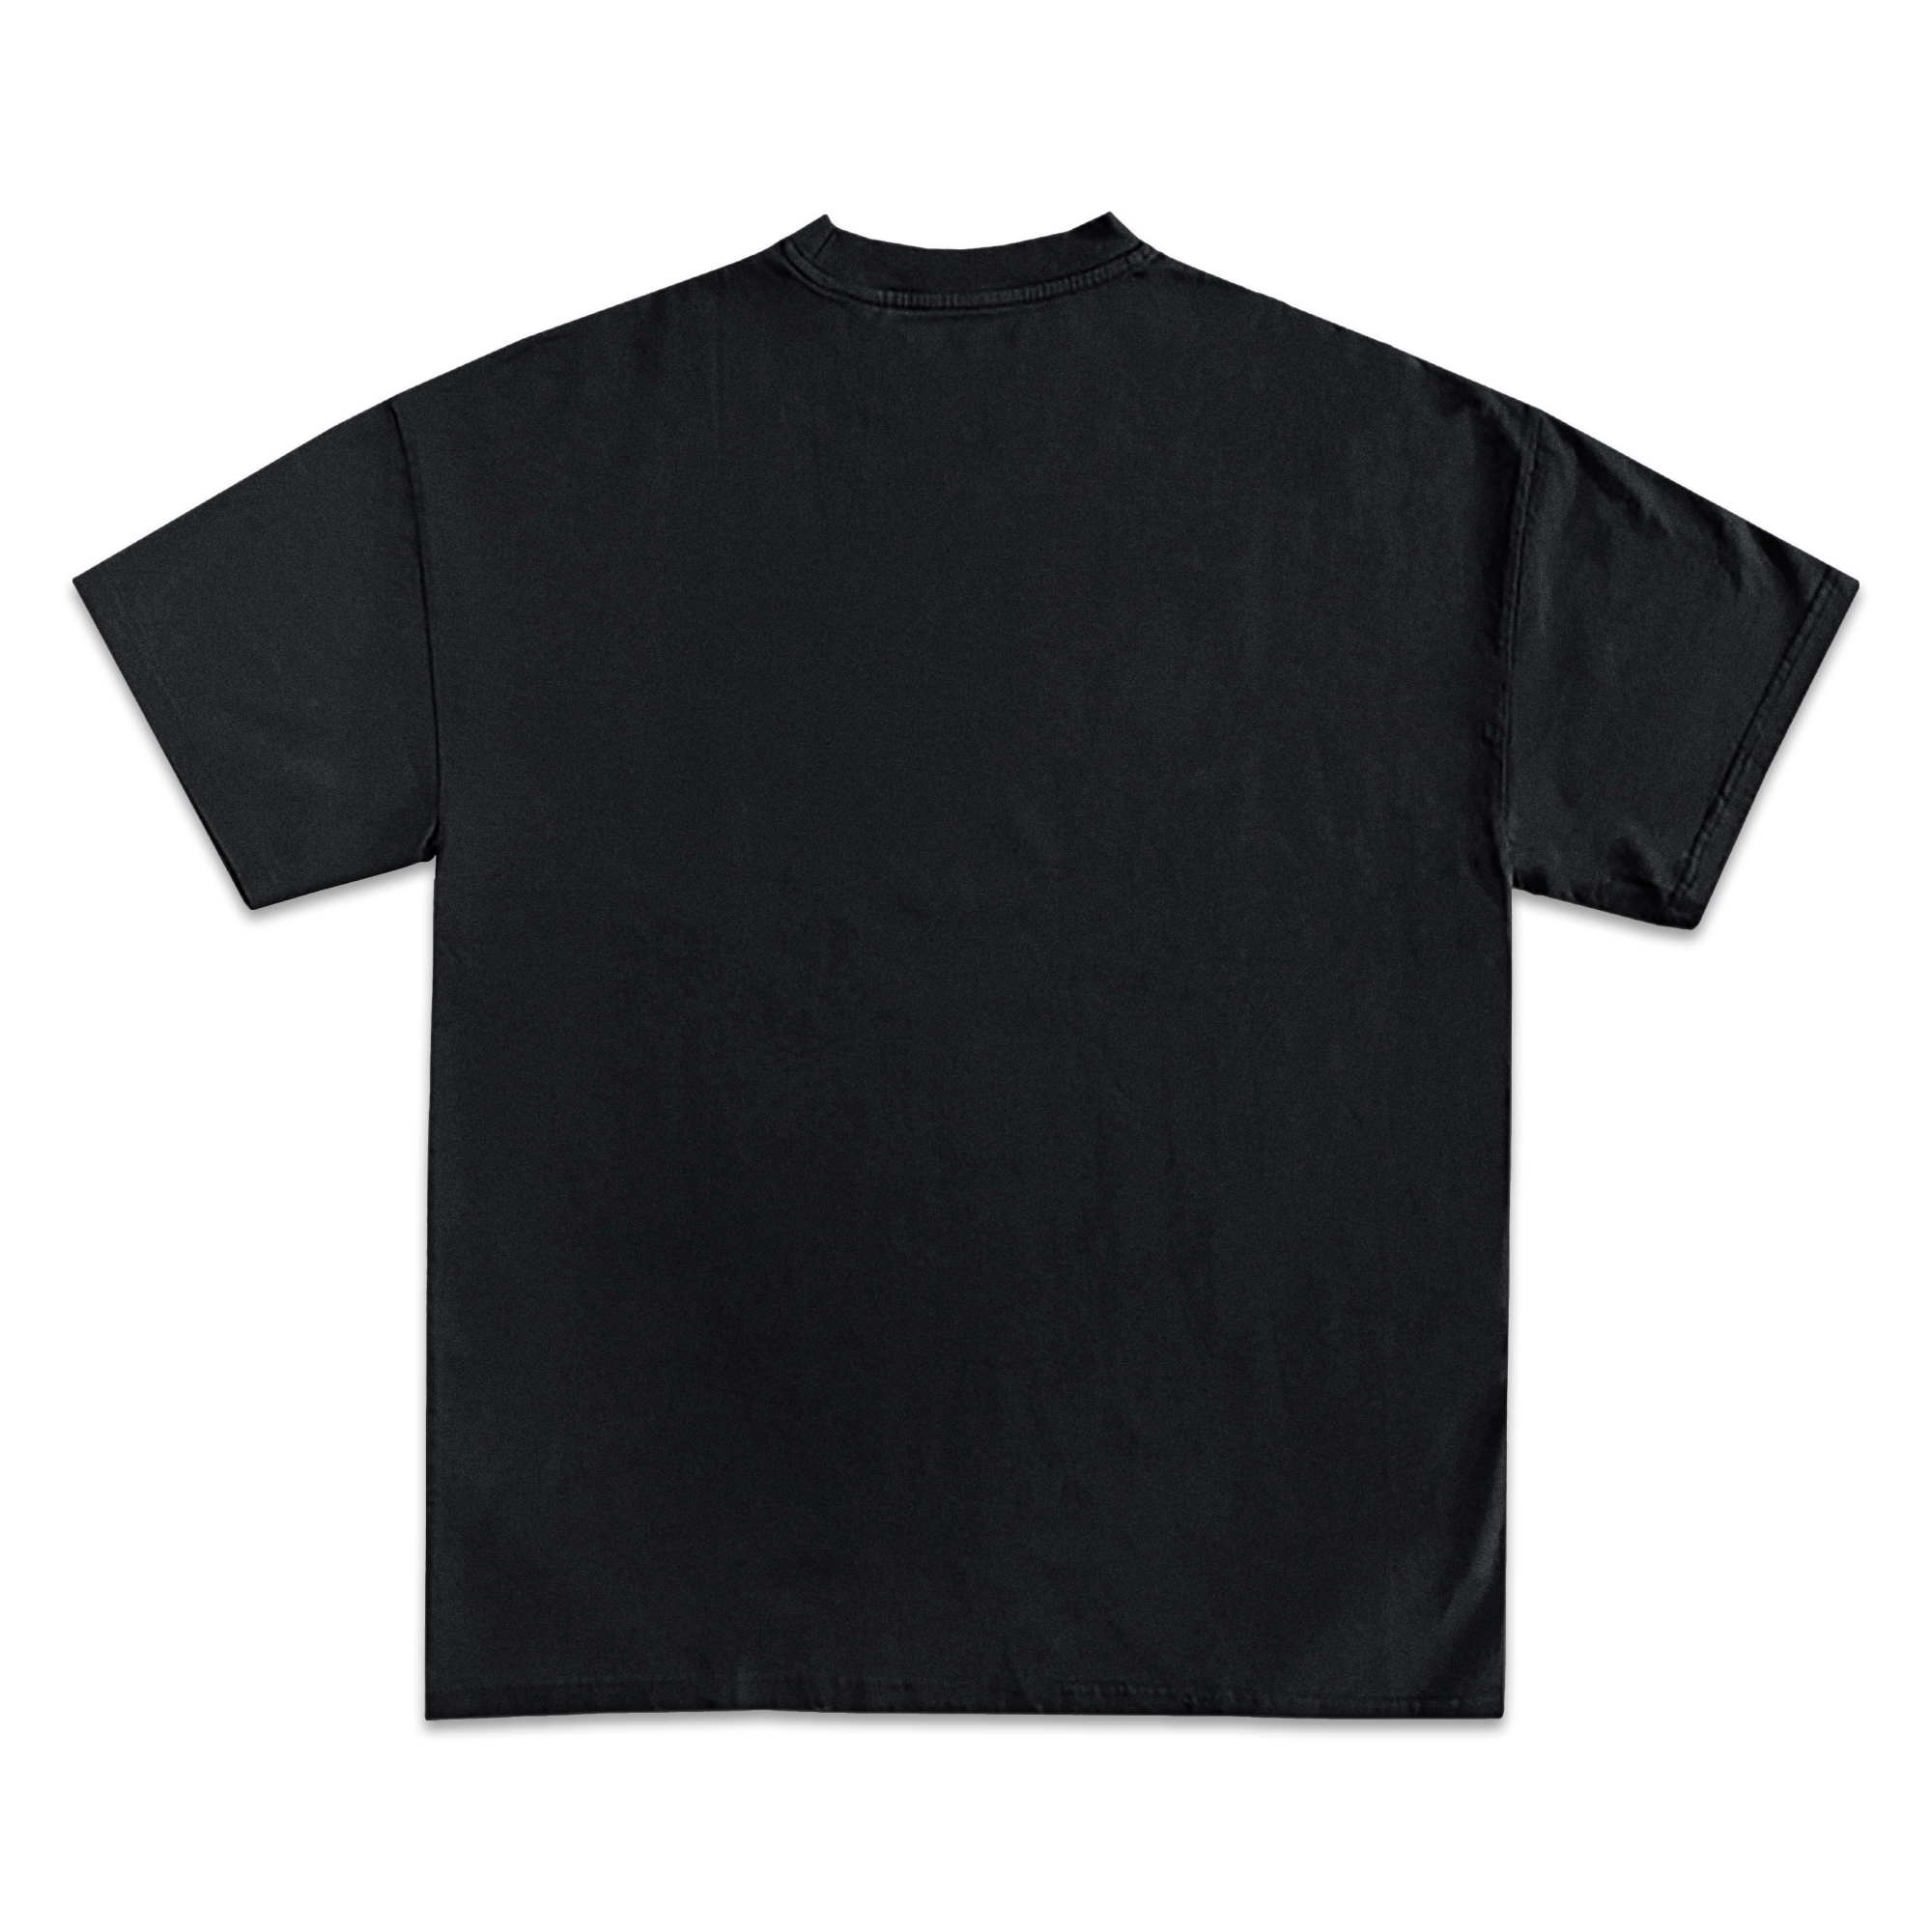 Goodfellas Retro Graphic T-Shirt